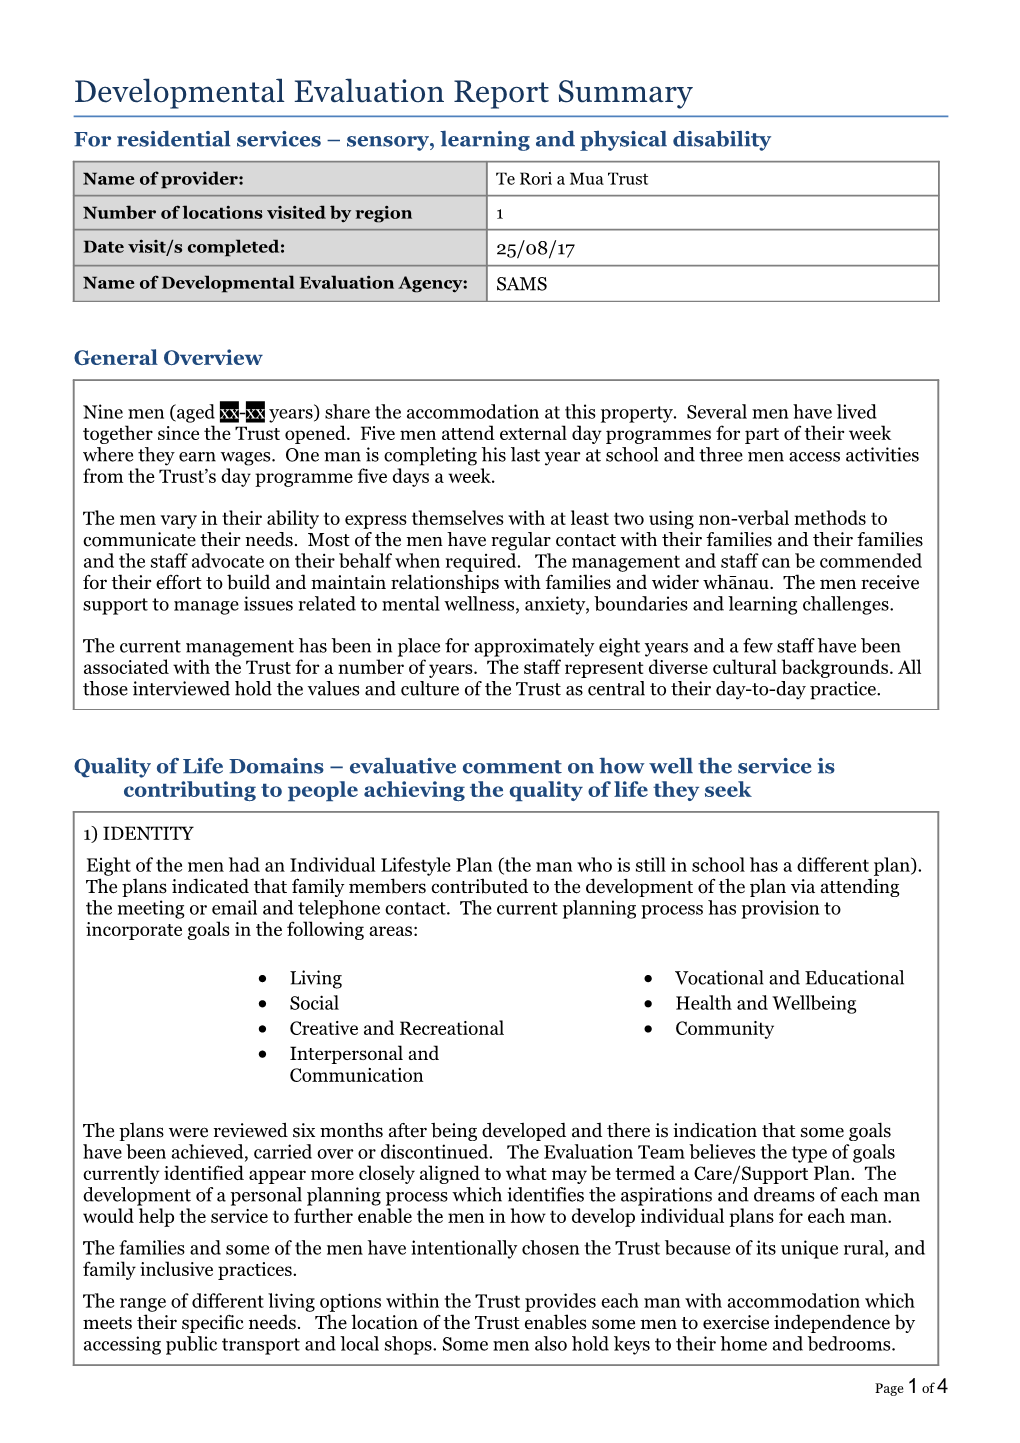 Developmental Evaluation Report Summary s1